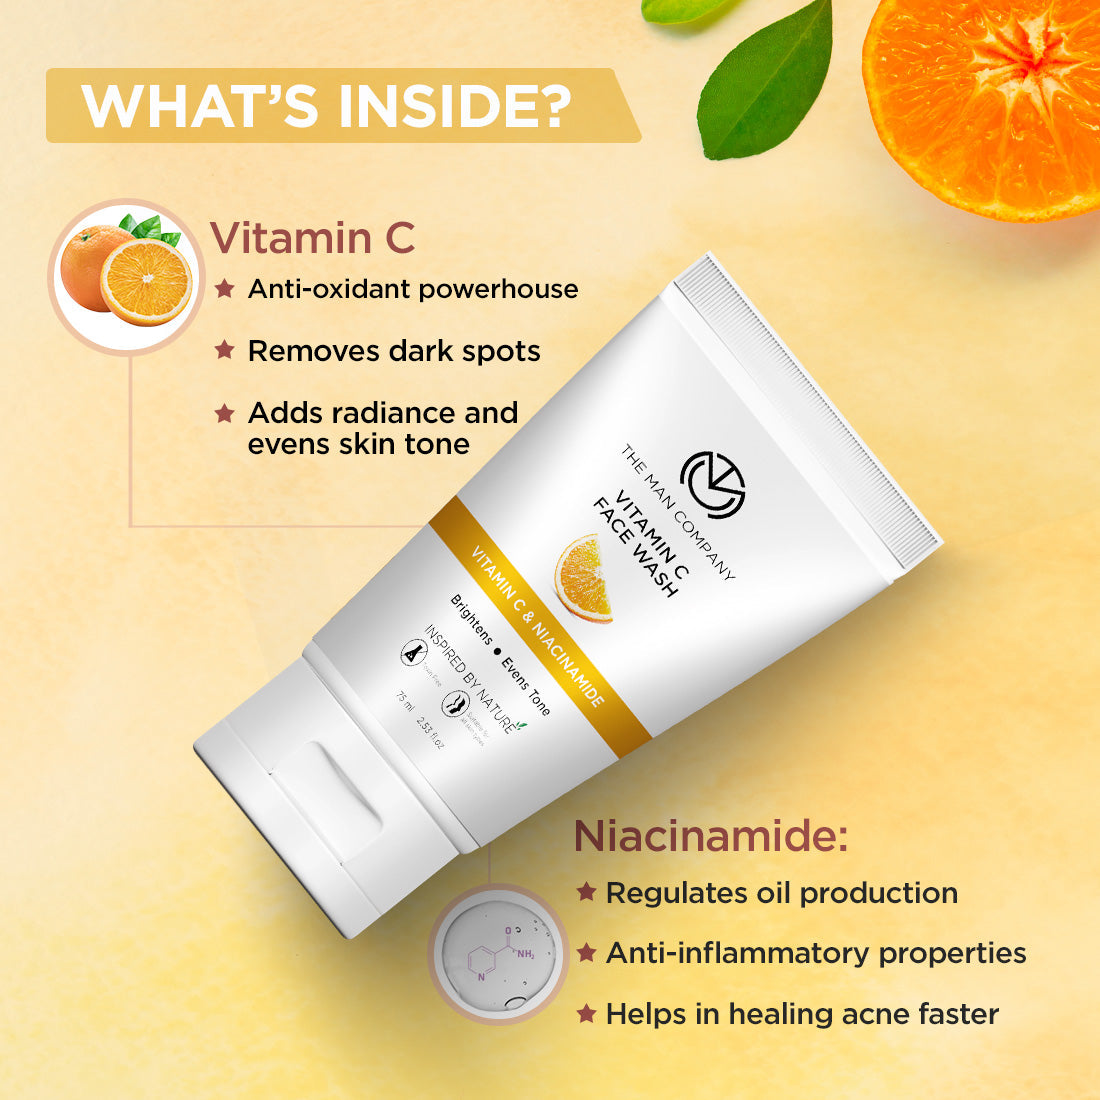 Vitamin C Face Wash | Vitamin C & Niacinamide (75ml)